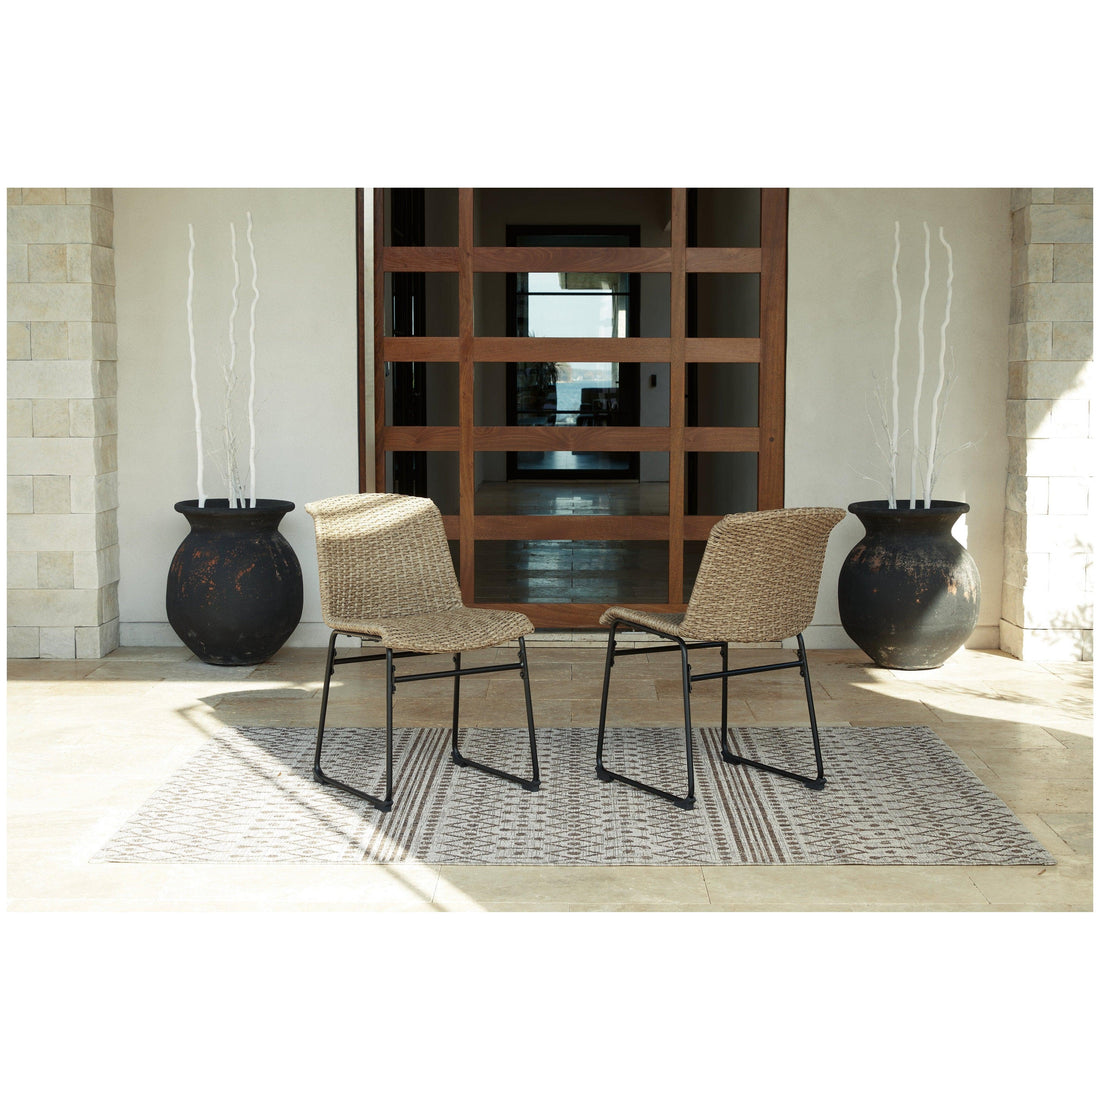 Amaris Outdoor Dining Chair (Set of 2) Ash-P369-601